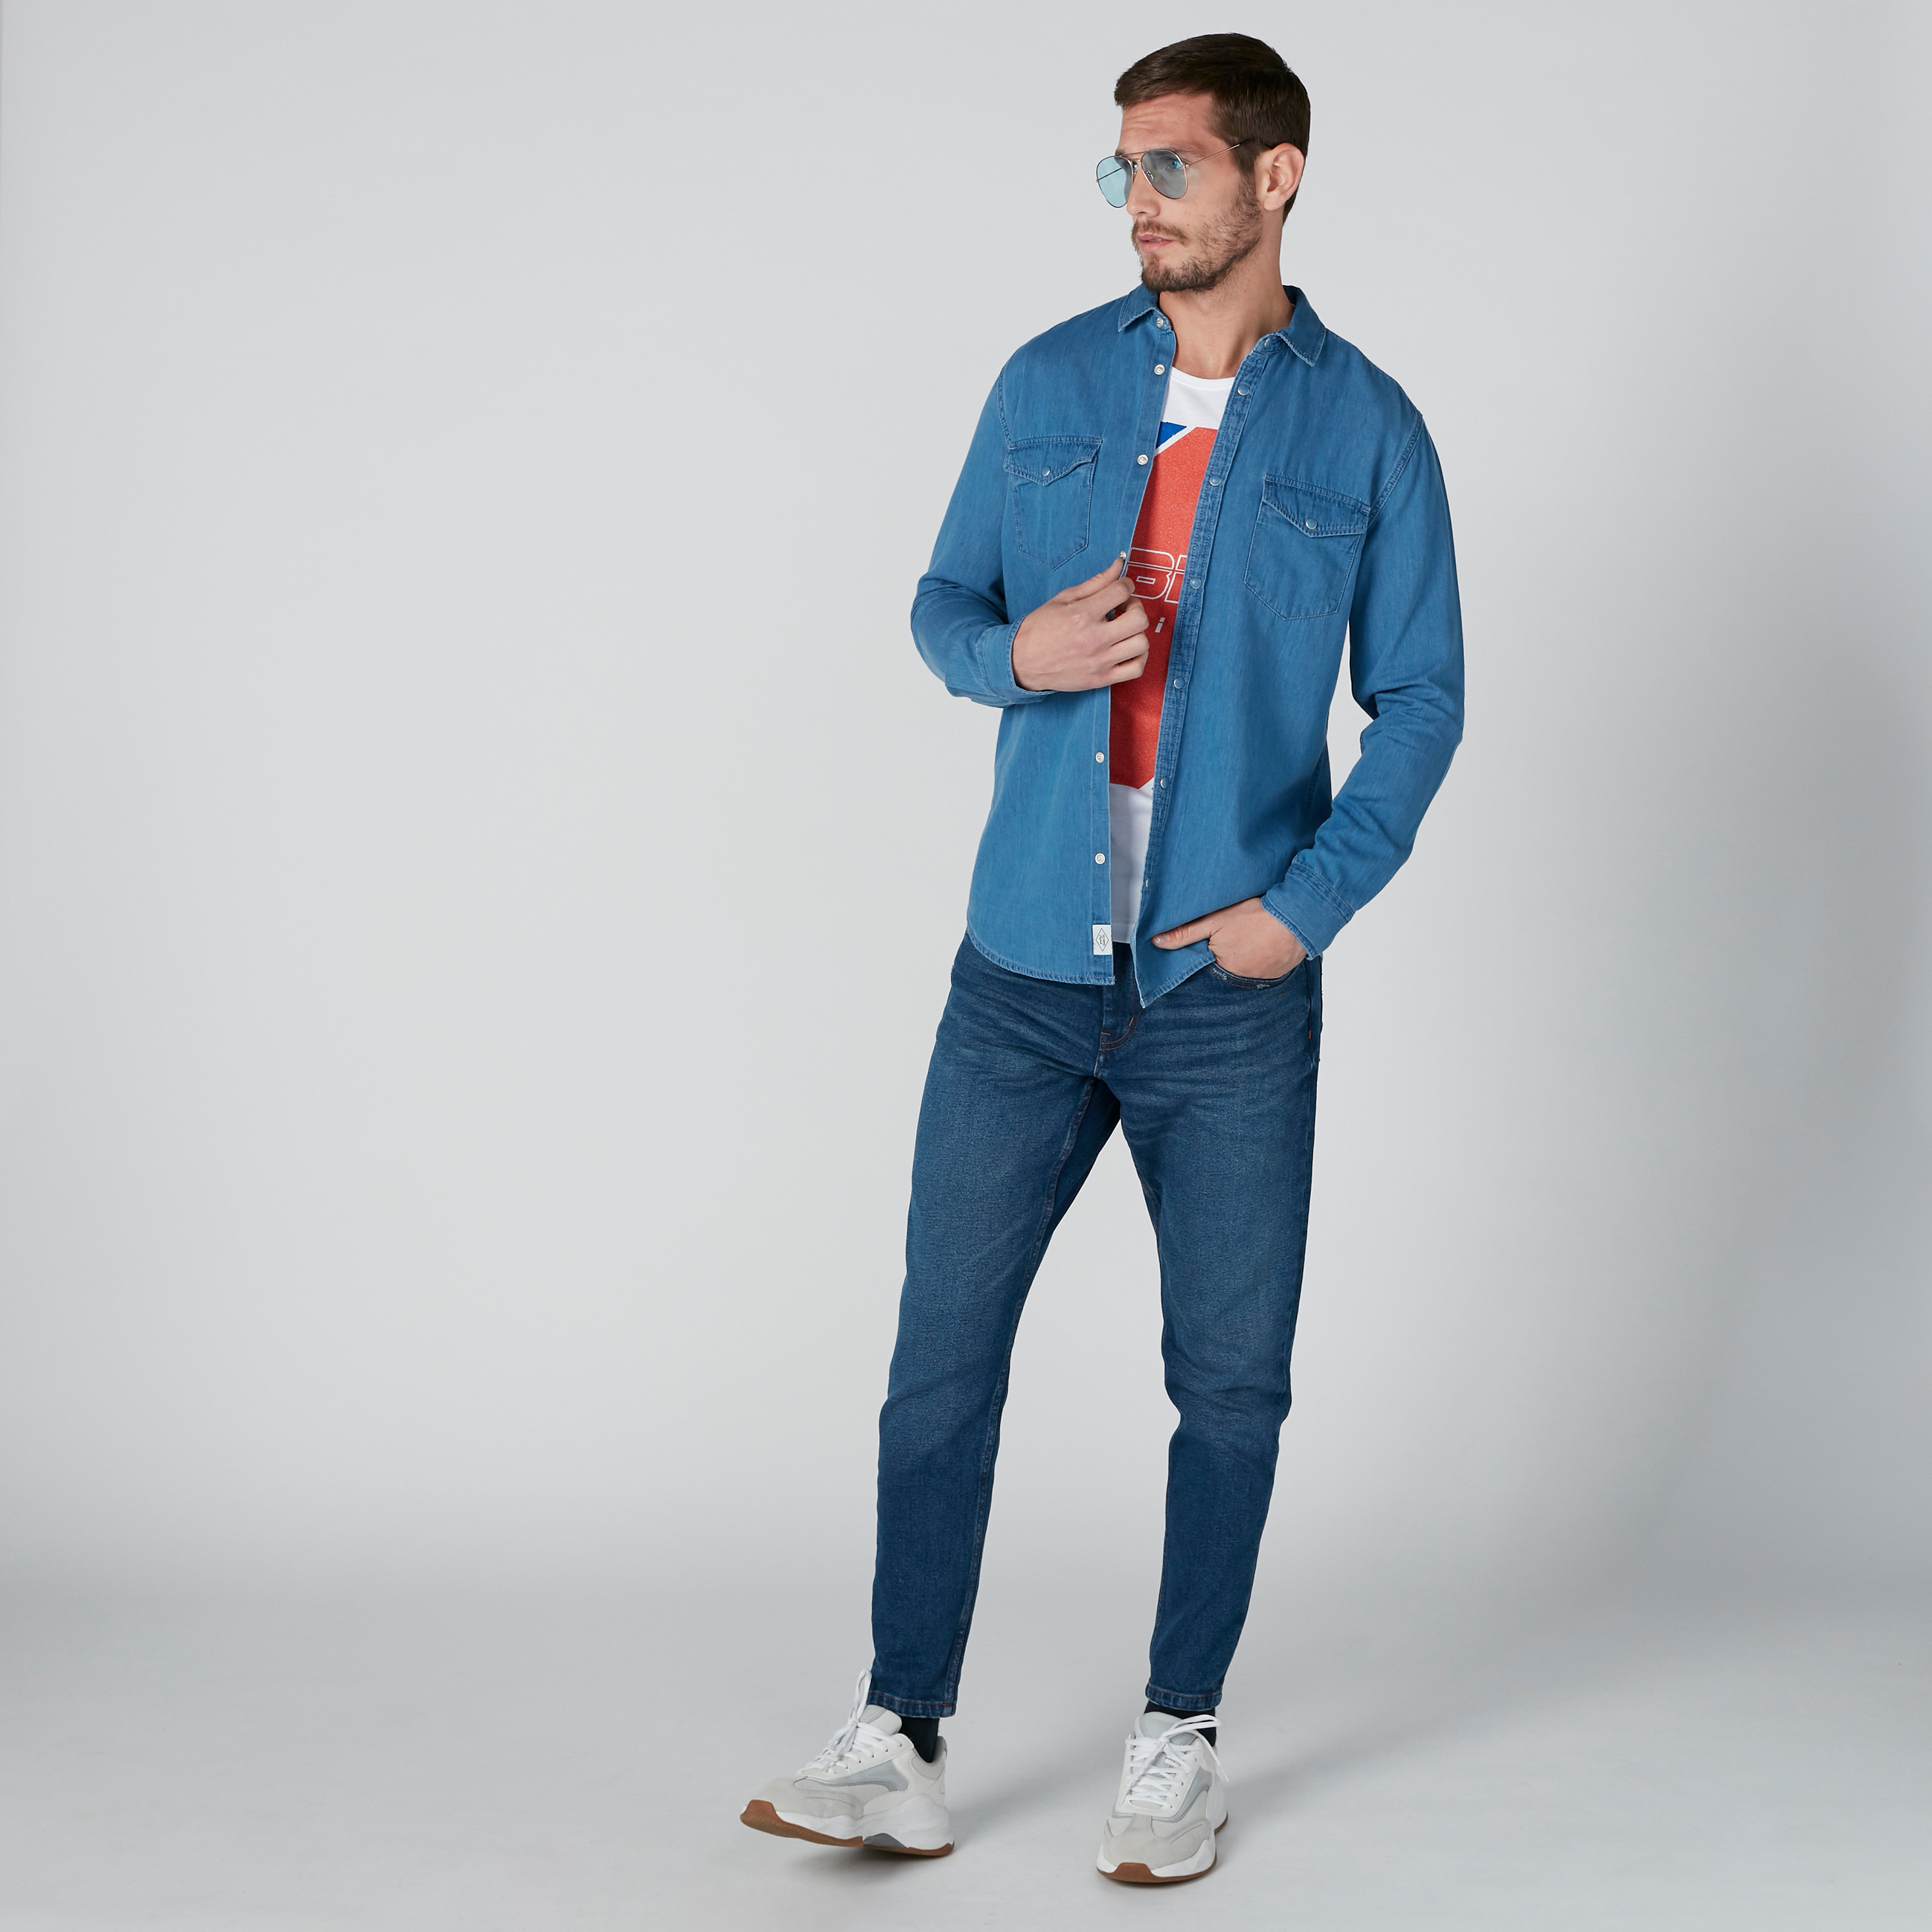 Buy Being Human Mens Navy Blue Printed Slim Fit Casual Shirt Online